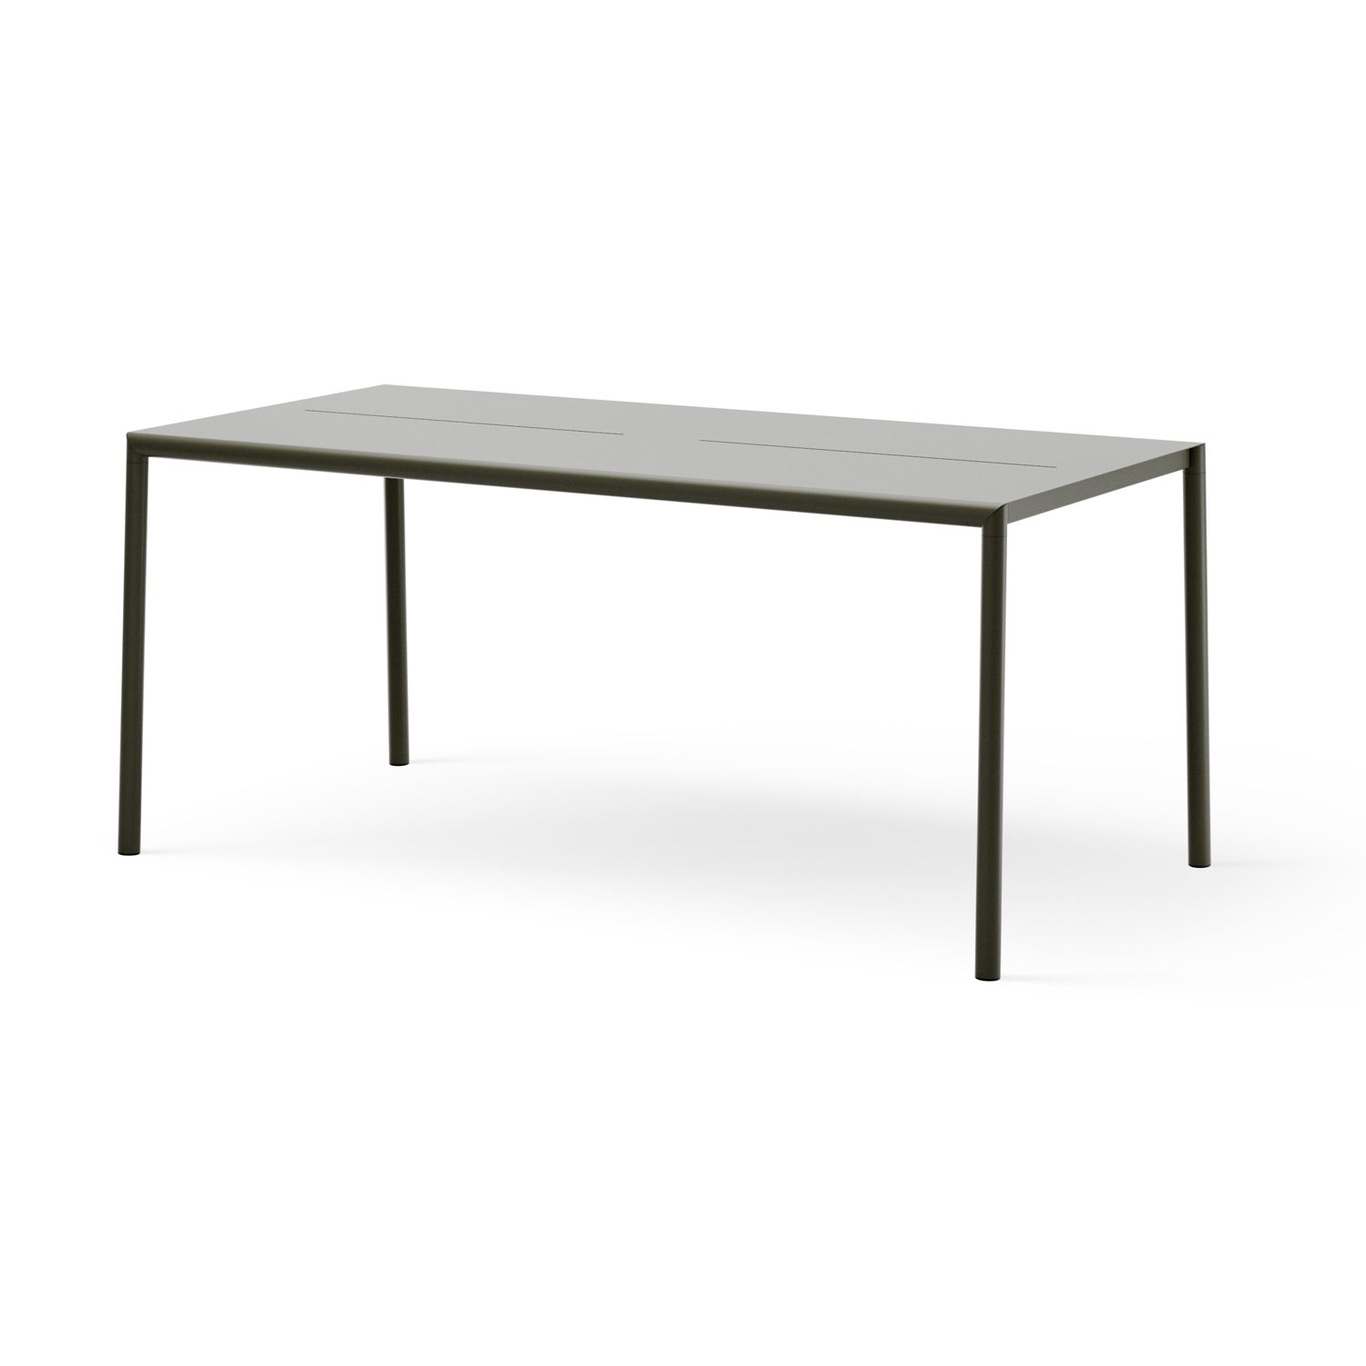 May Table 170x85, Outdoor, Steel, Dark Green